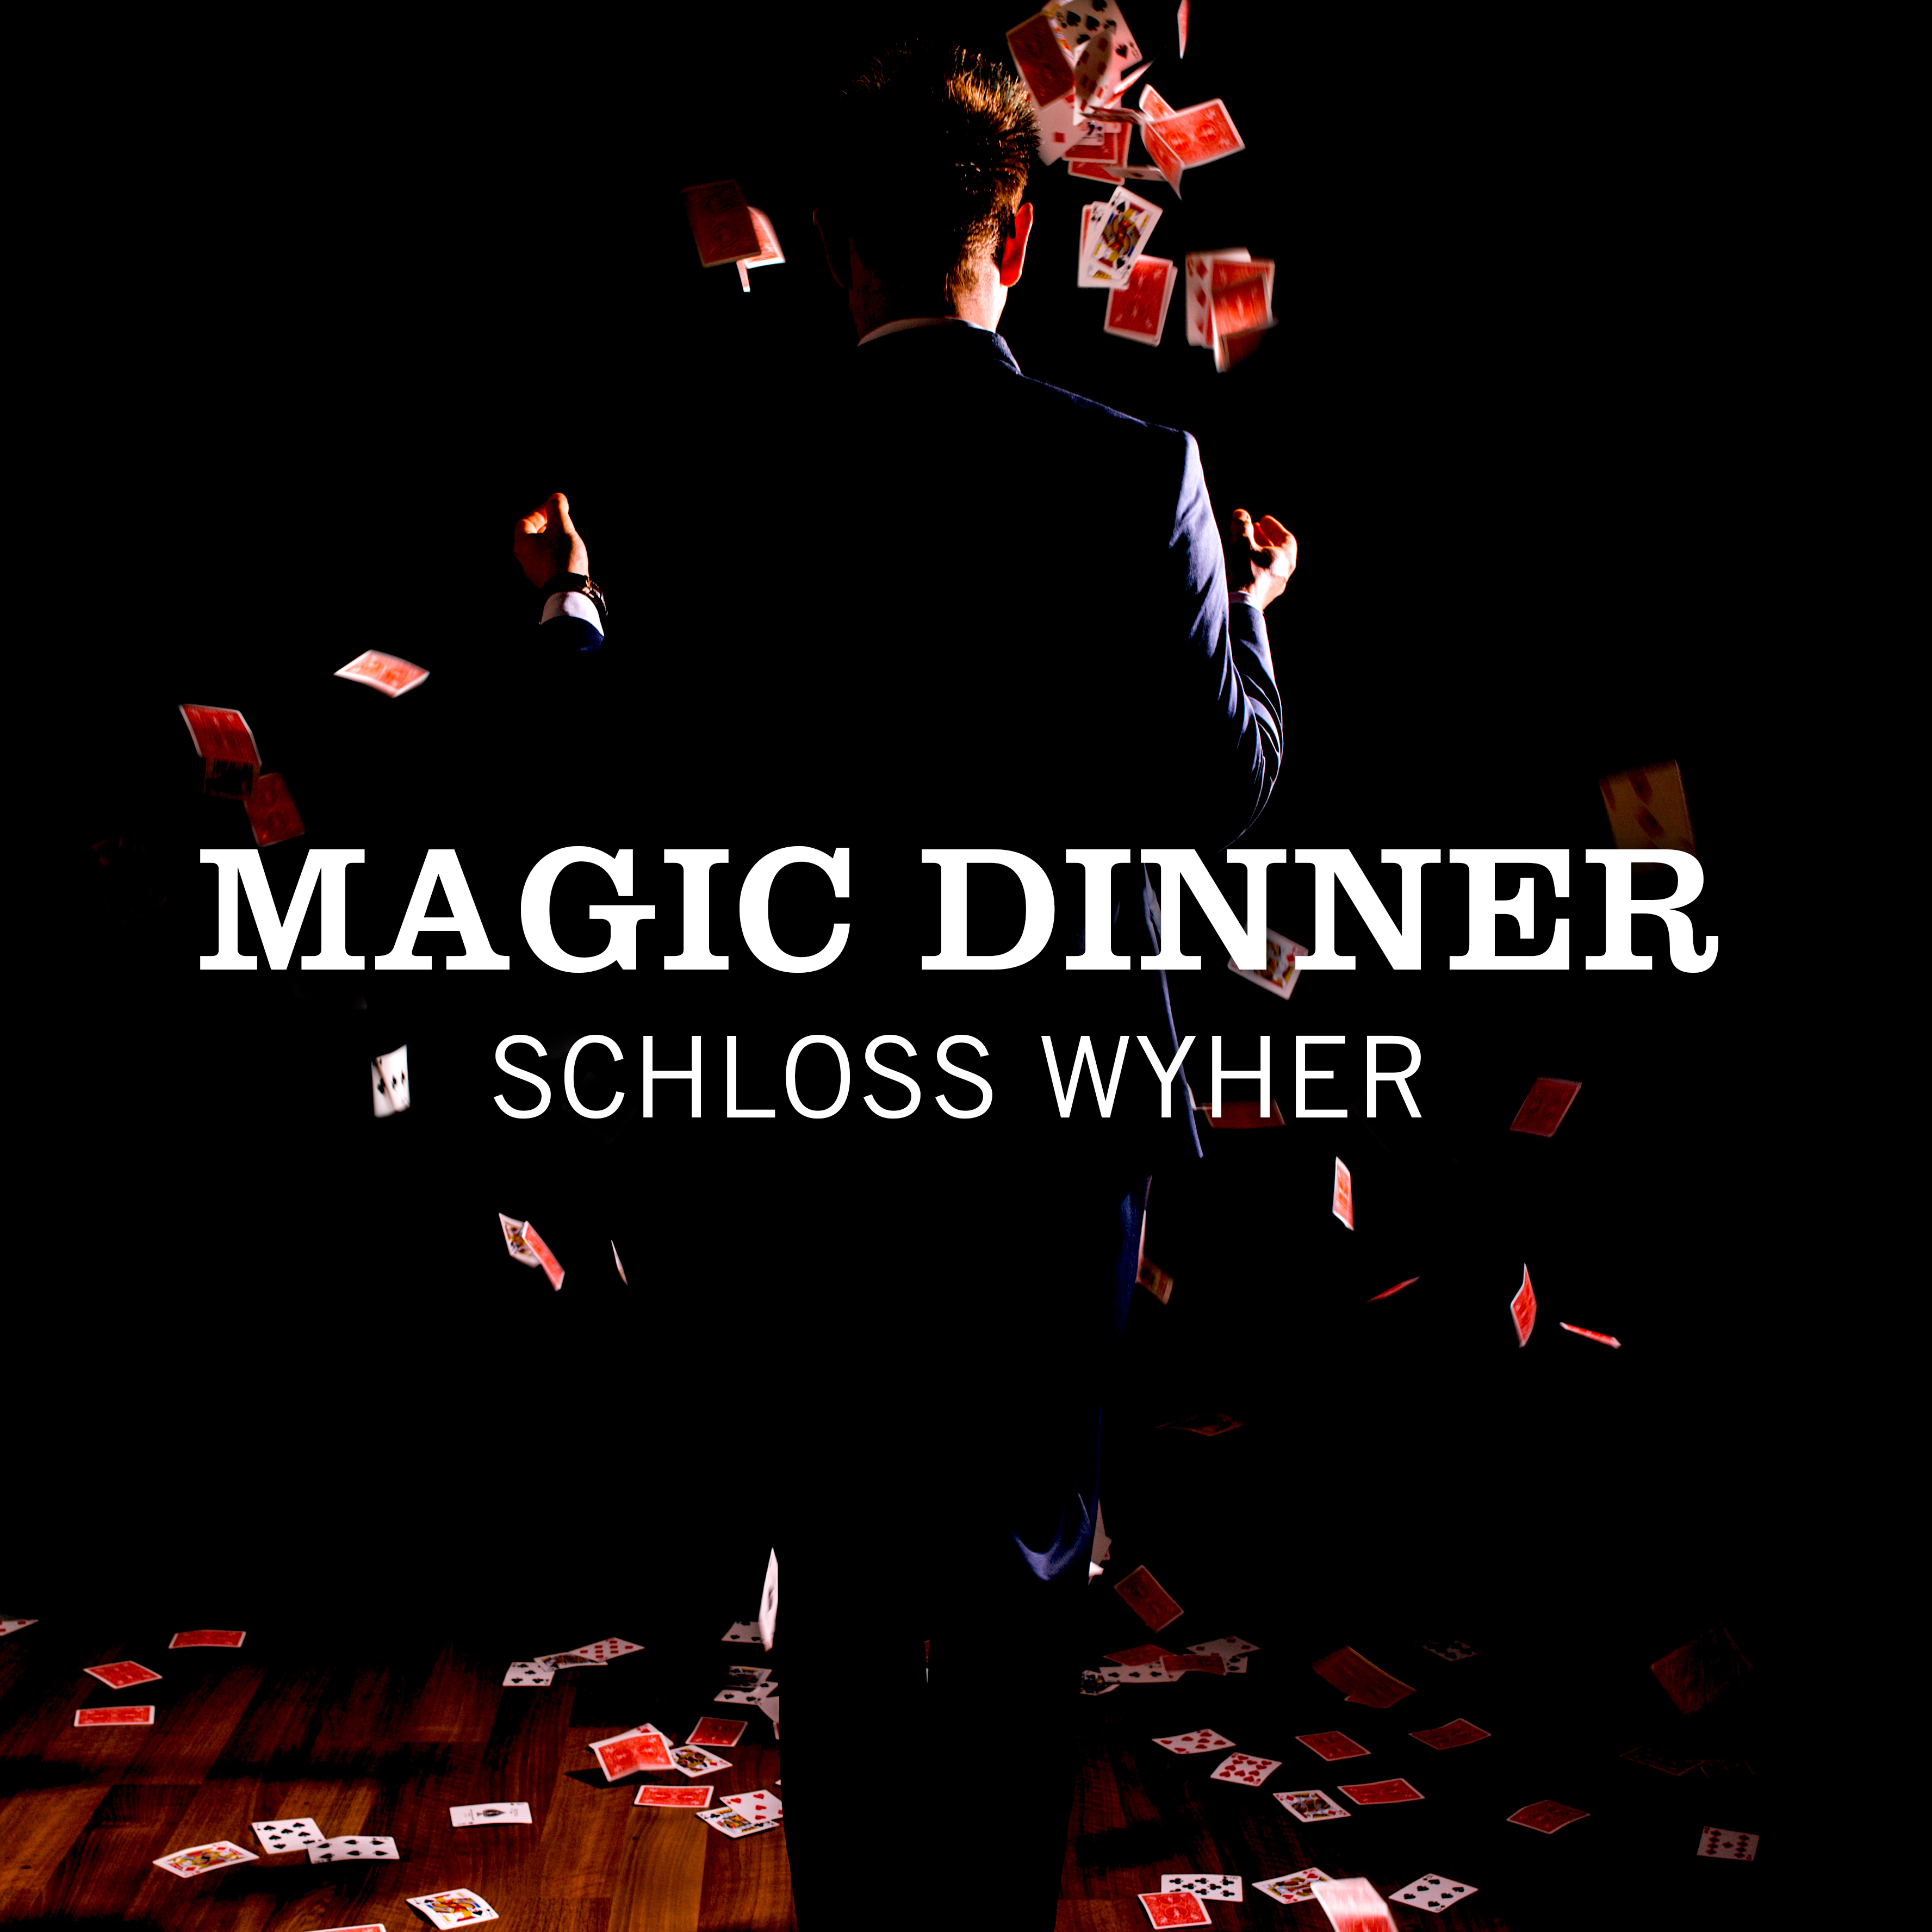 MAGIC DINNER - THE ART OF MAGIC - 21. + 22. Jan. 2022